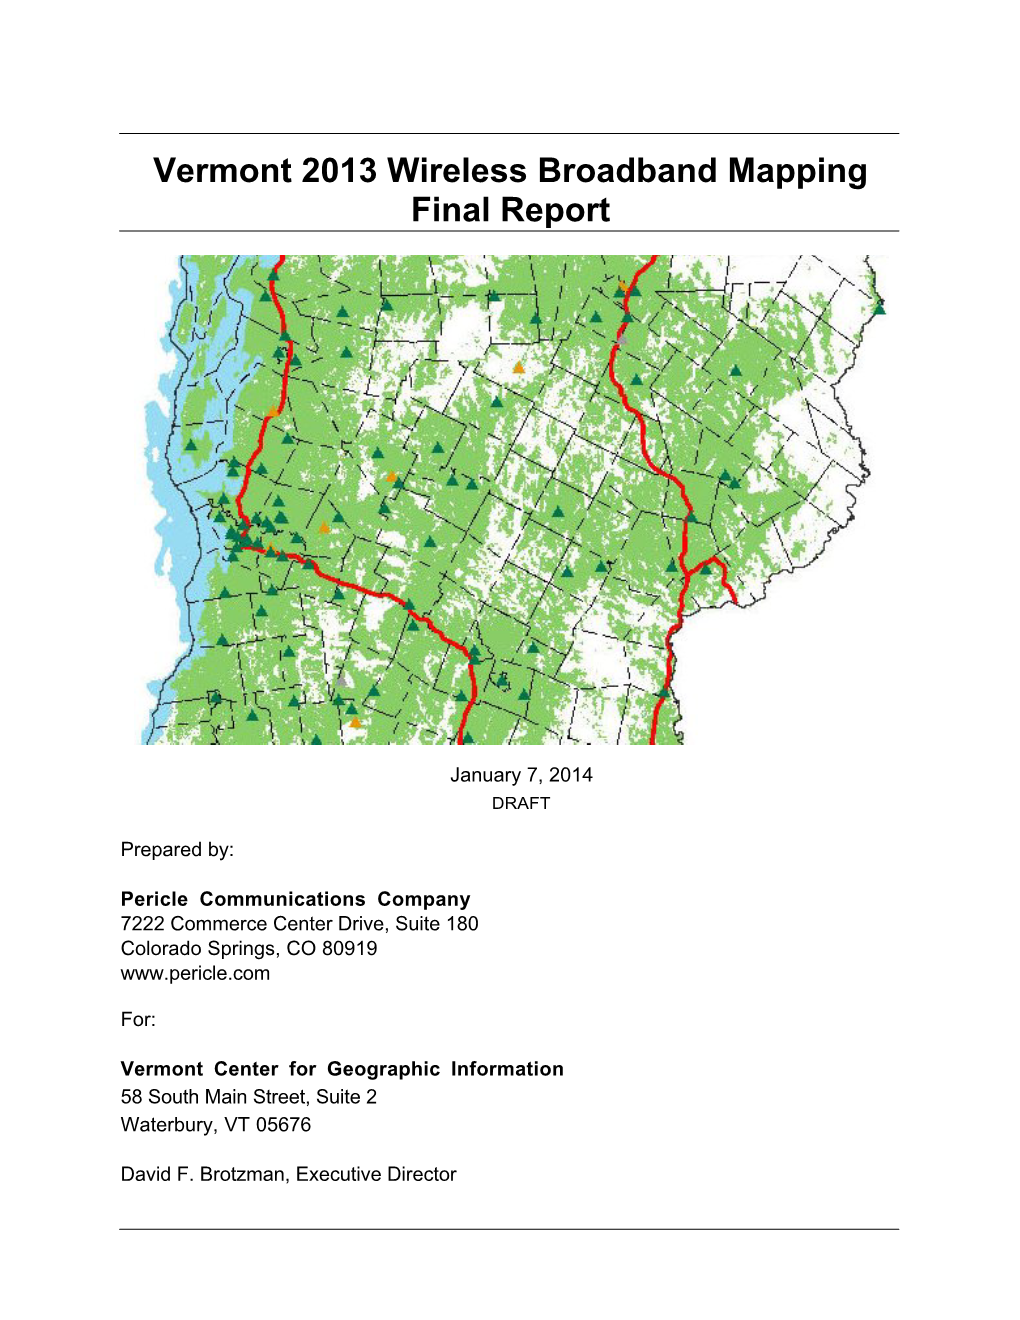 Vermont 2013 Wireless Broadband Mapping Final Report